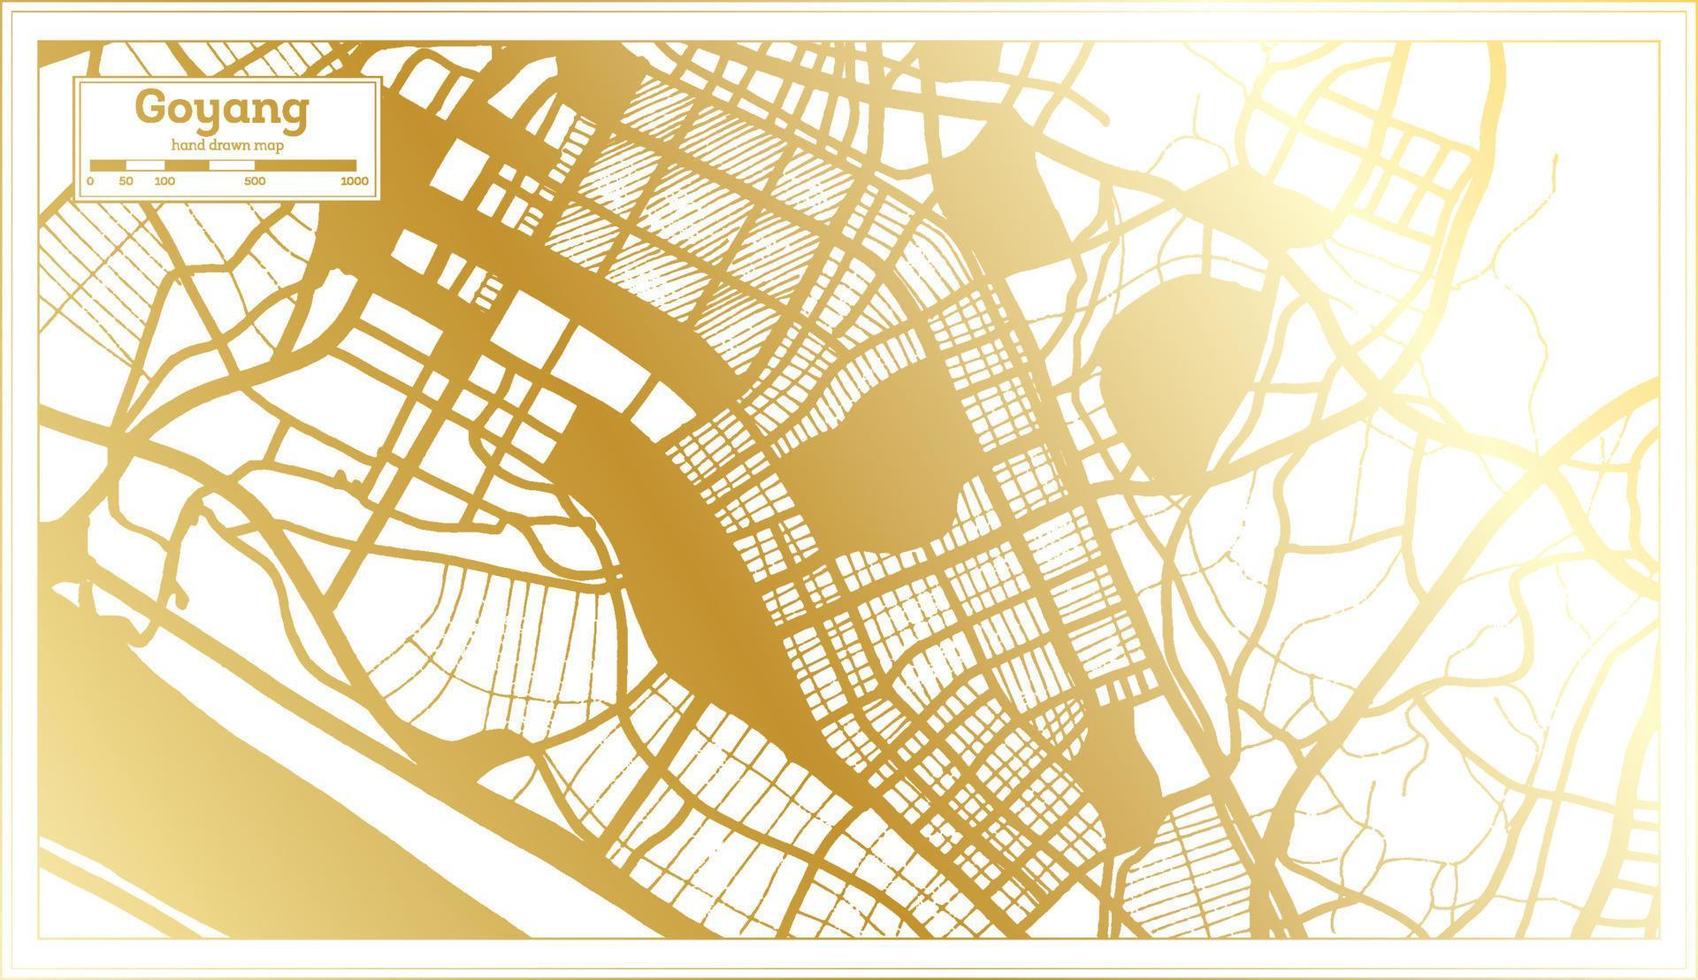 Goyang Südkorea Stadtplan im Retro-Stil in goldener Farbe. Übersichtskarte. vektor